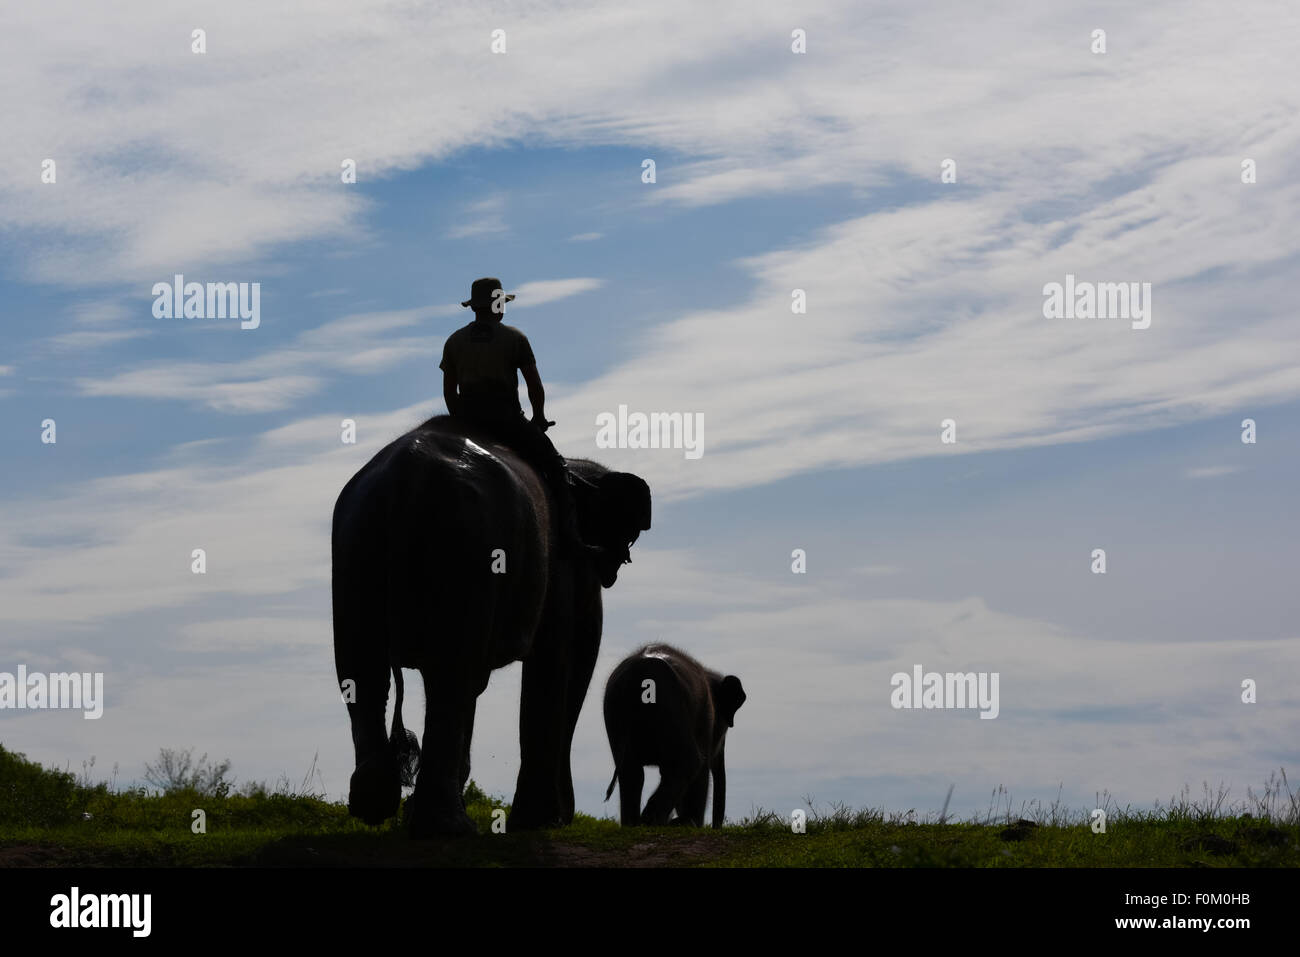 Mahouts riding elephants at Sumatran elephant rehabilitation center, silhouetted against bright sky. Way Kambas National Park, Indonesia. Stock Photo